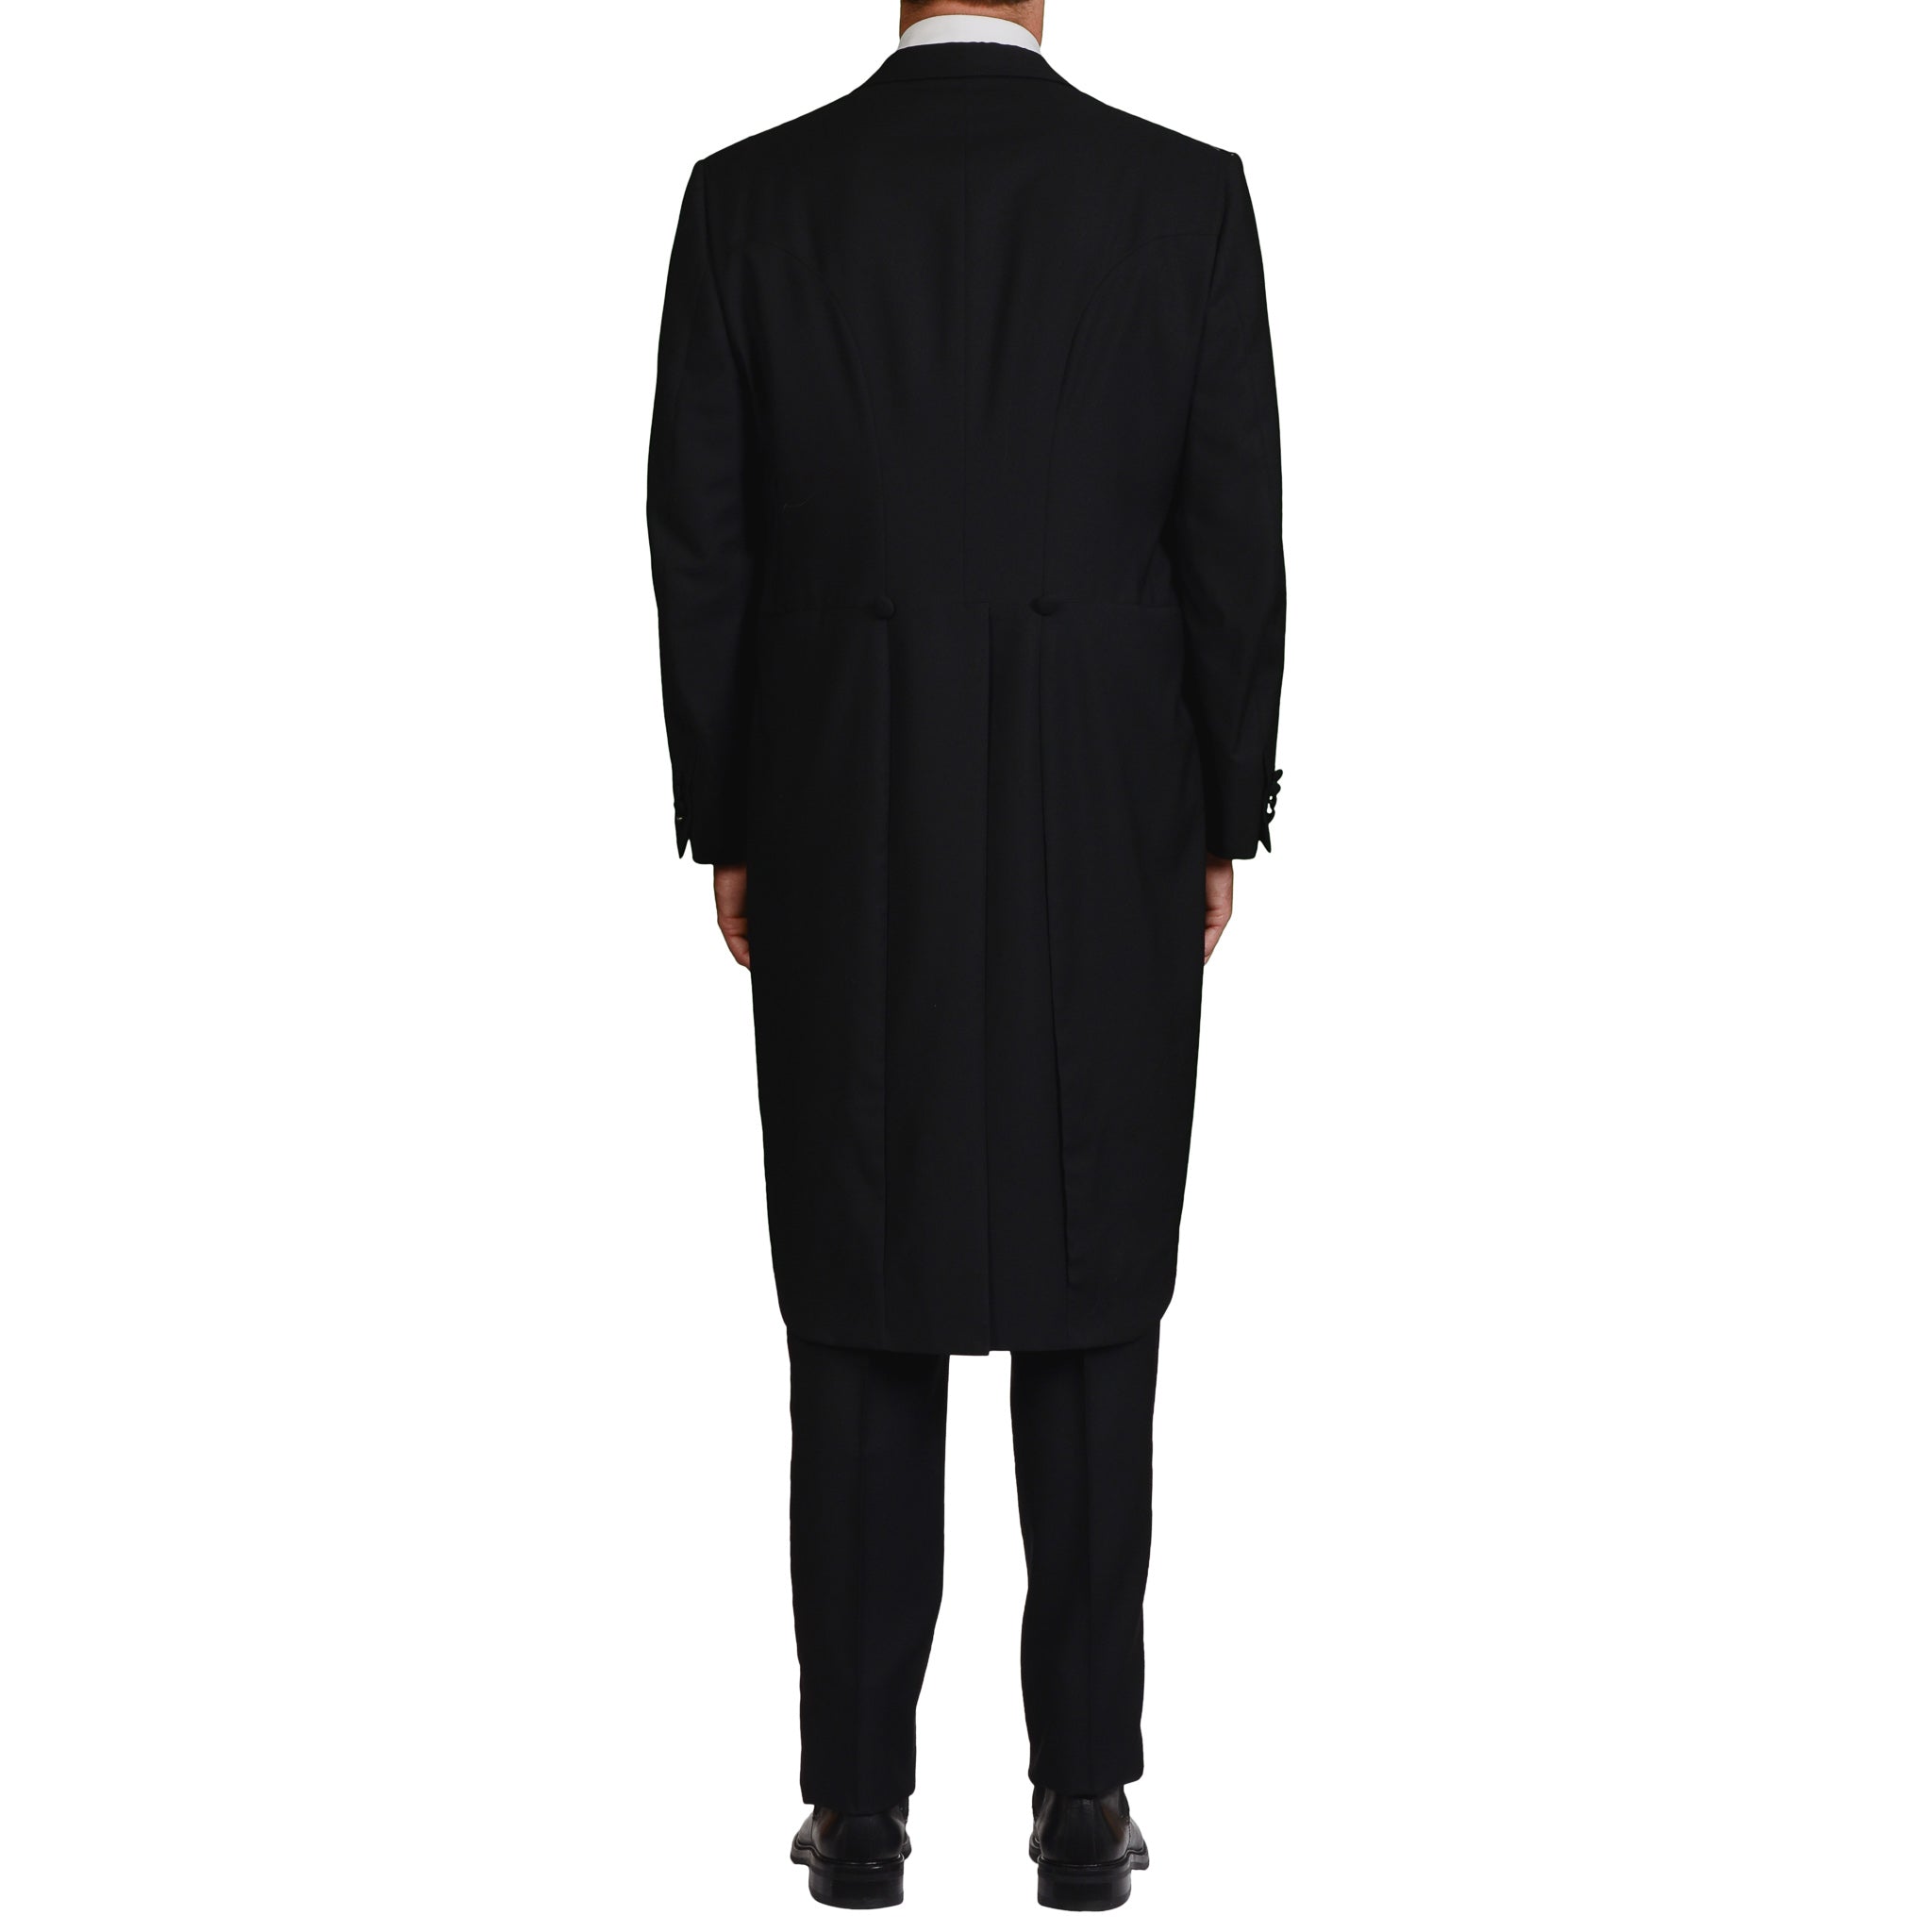 BIJAN Handmade Black Wool Mohair DB Tail Coat Frock Suit EU 58 NEW US ...